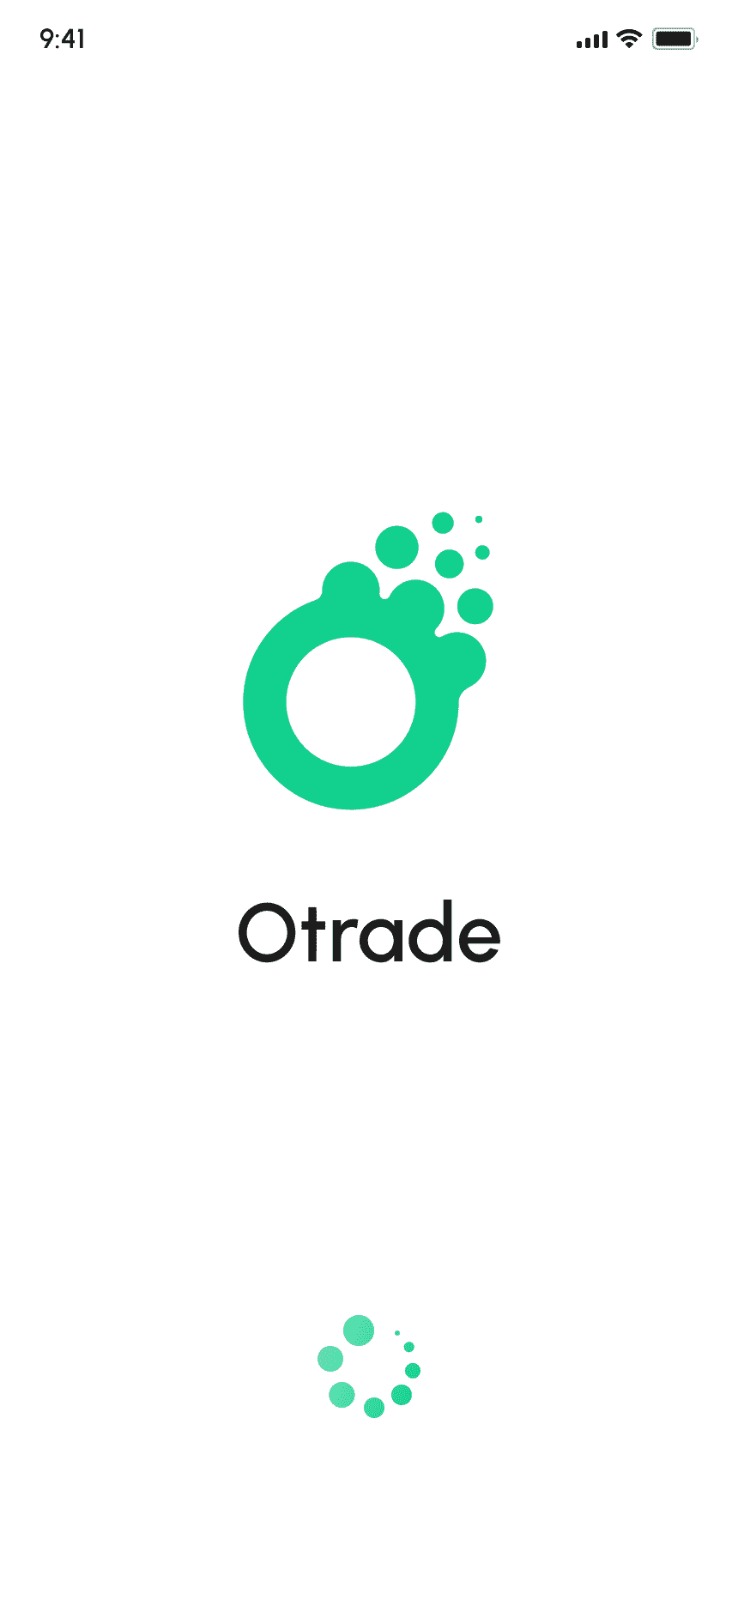 Otrade (Upstox Clone) Splash Screen